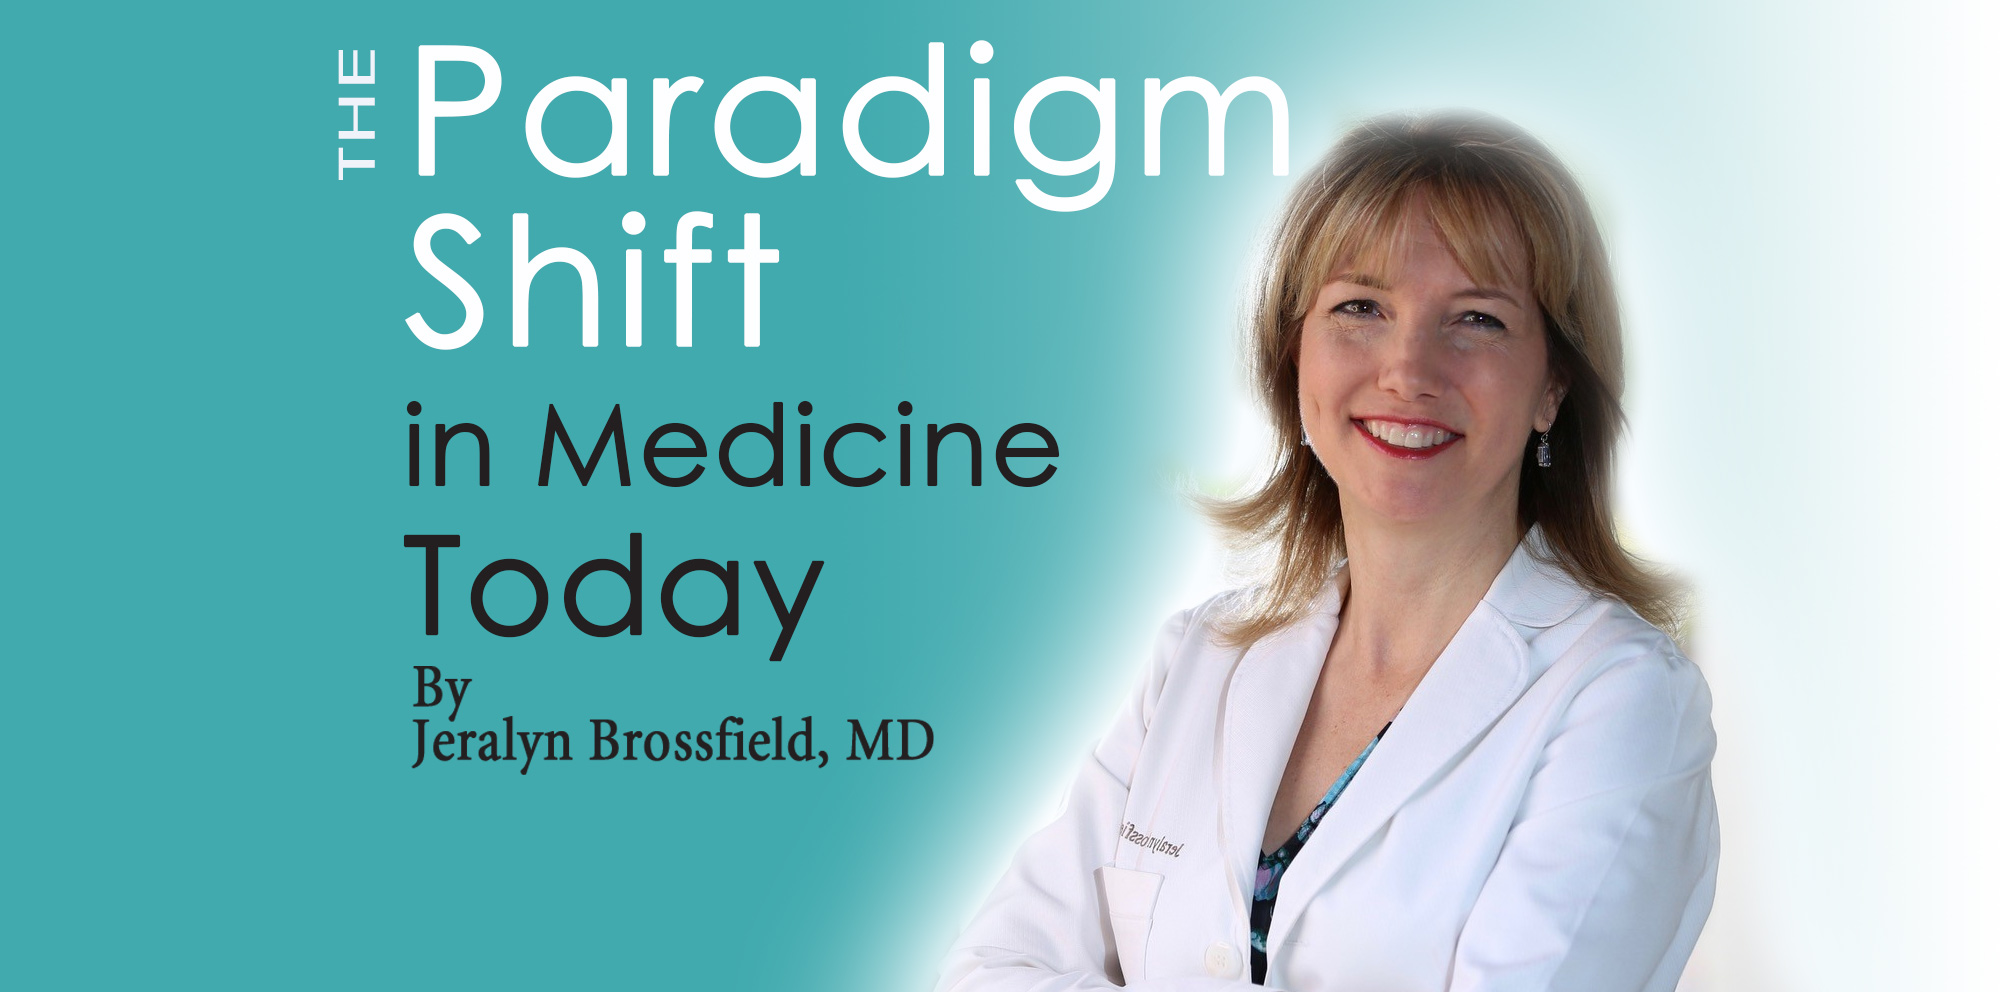 The Paradigm Shift in Medicine Today